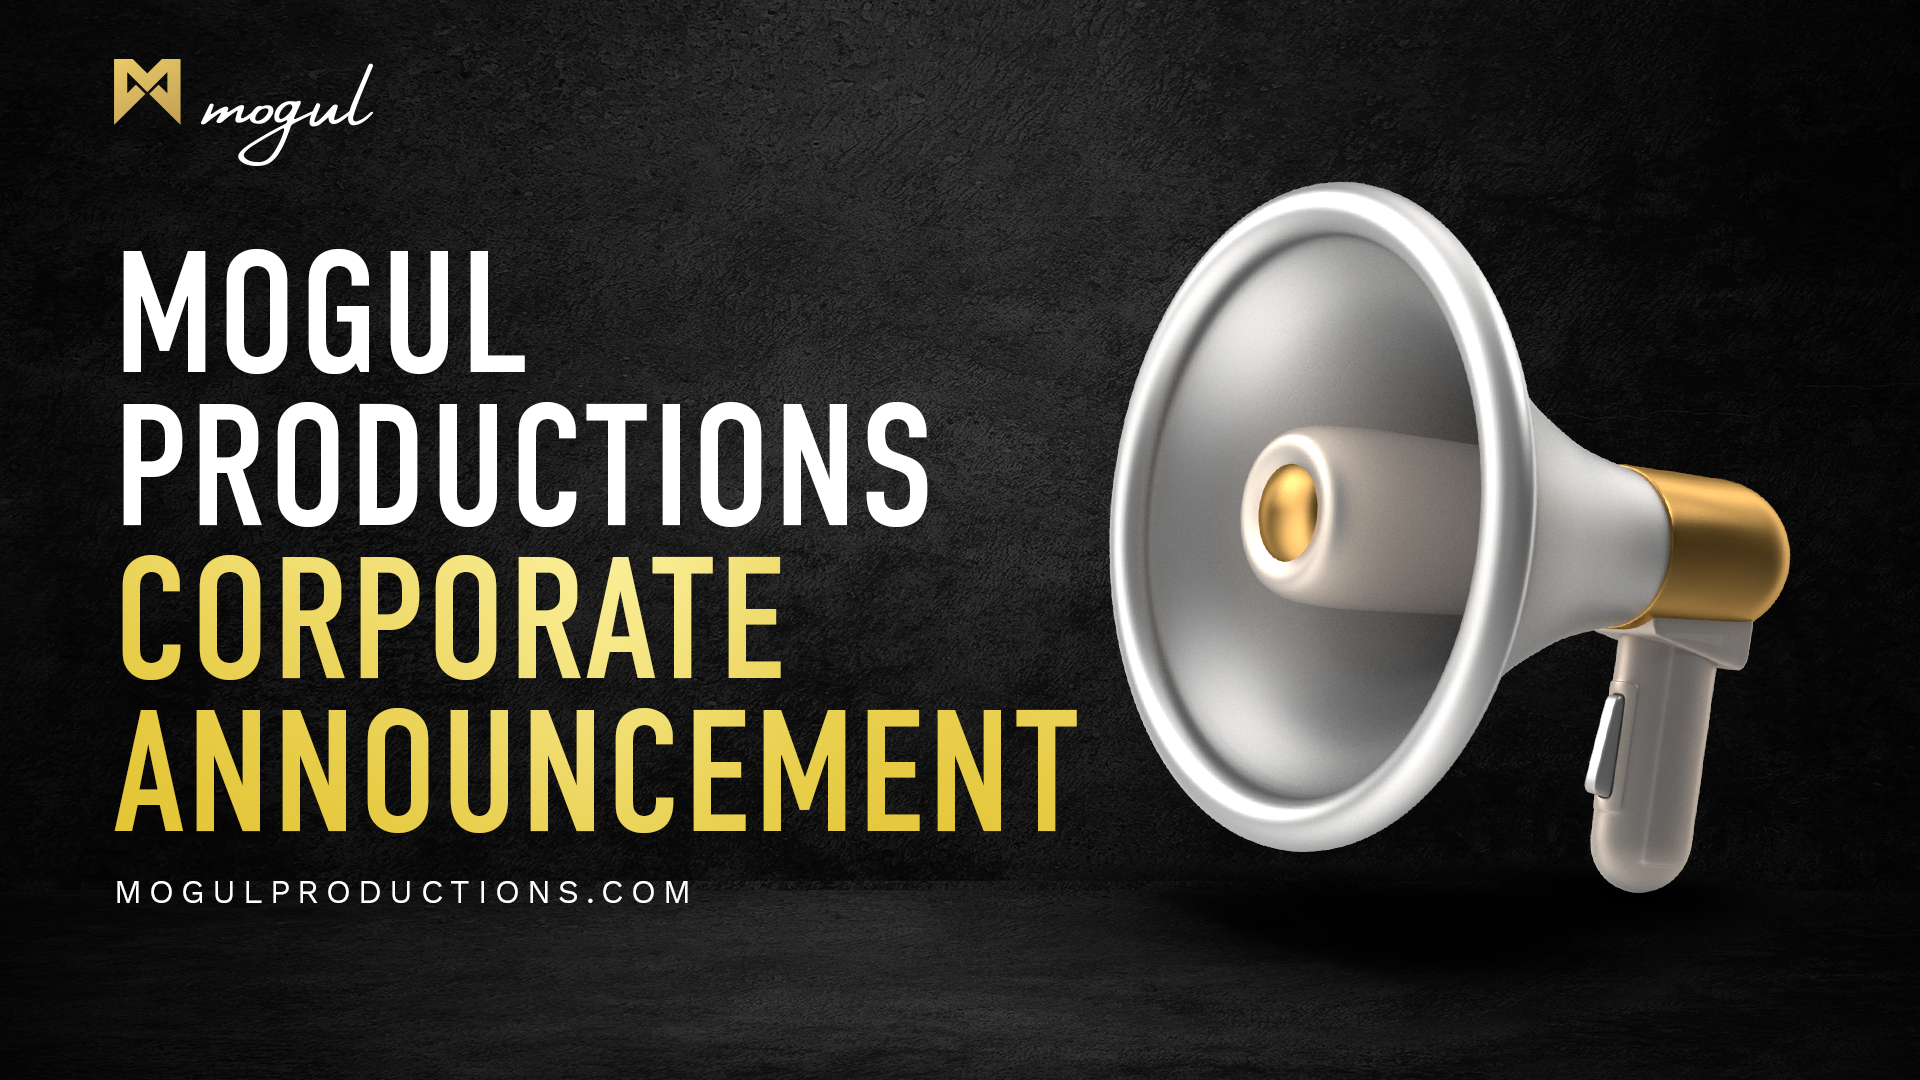 Mogul Productions Corporate Announcement